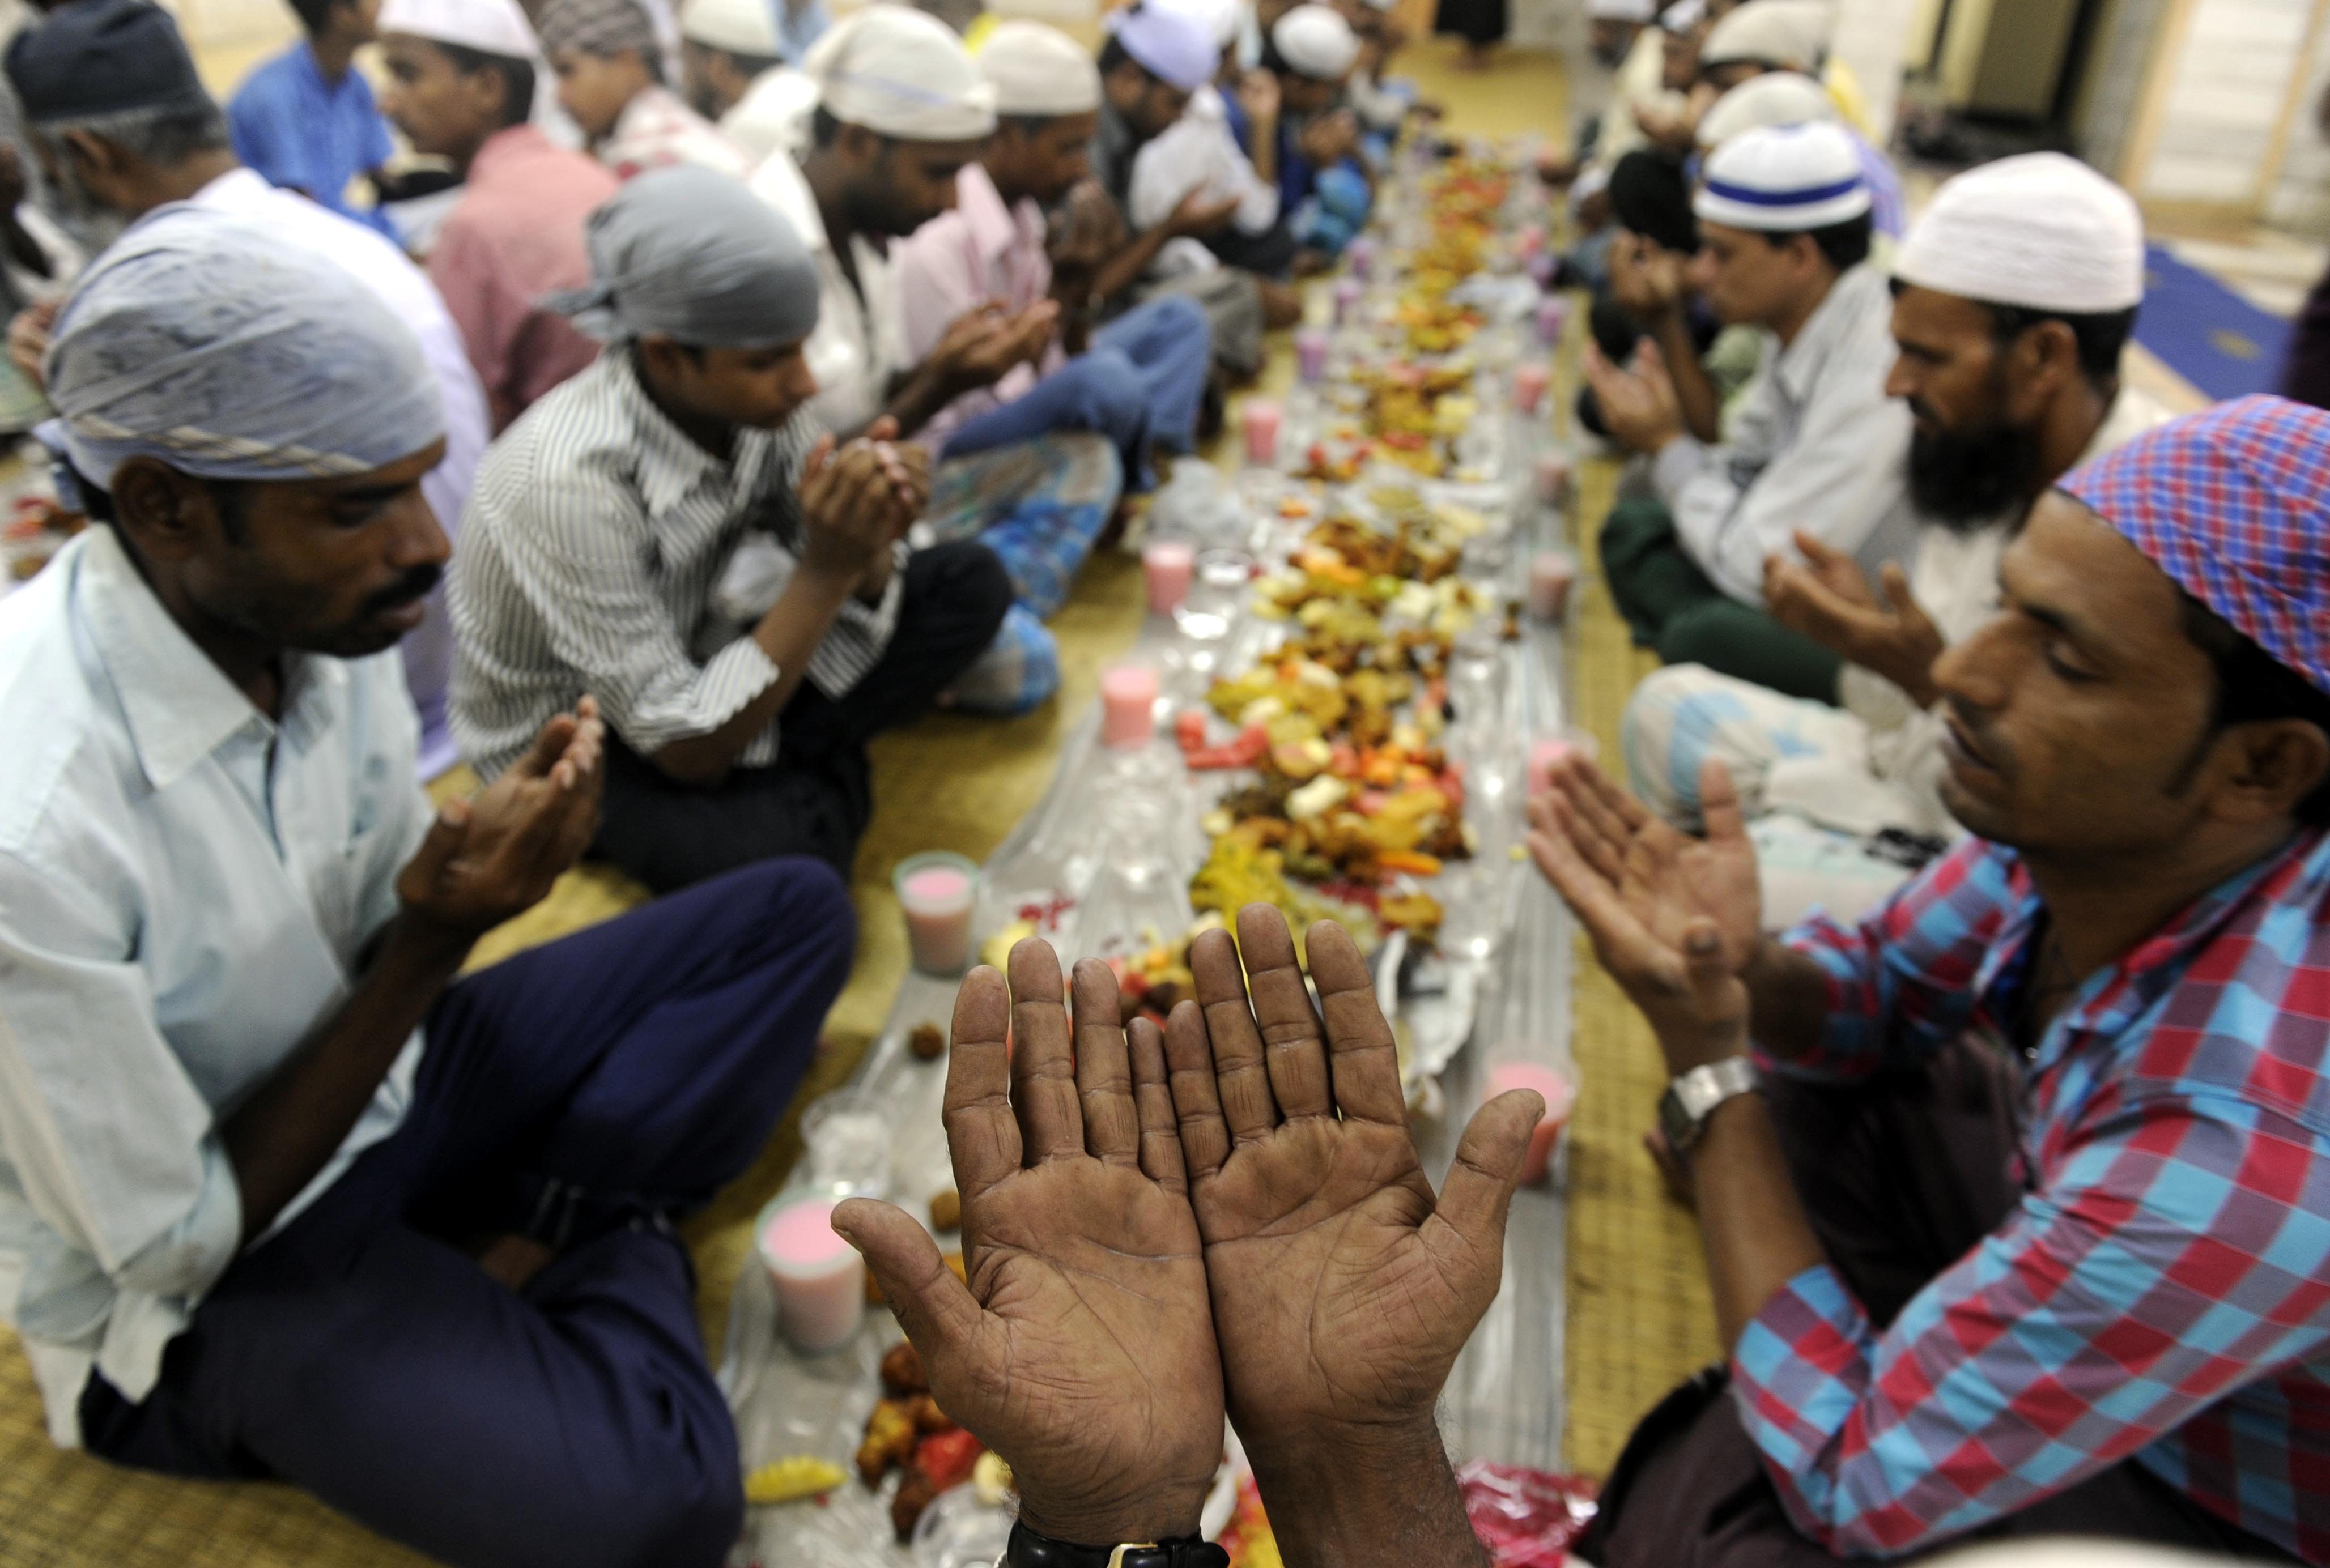 ramadan celebration food